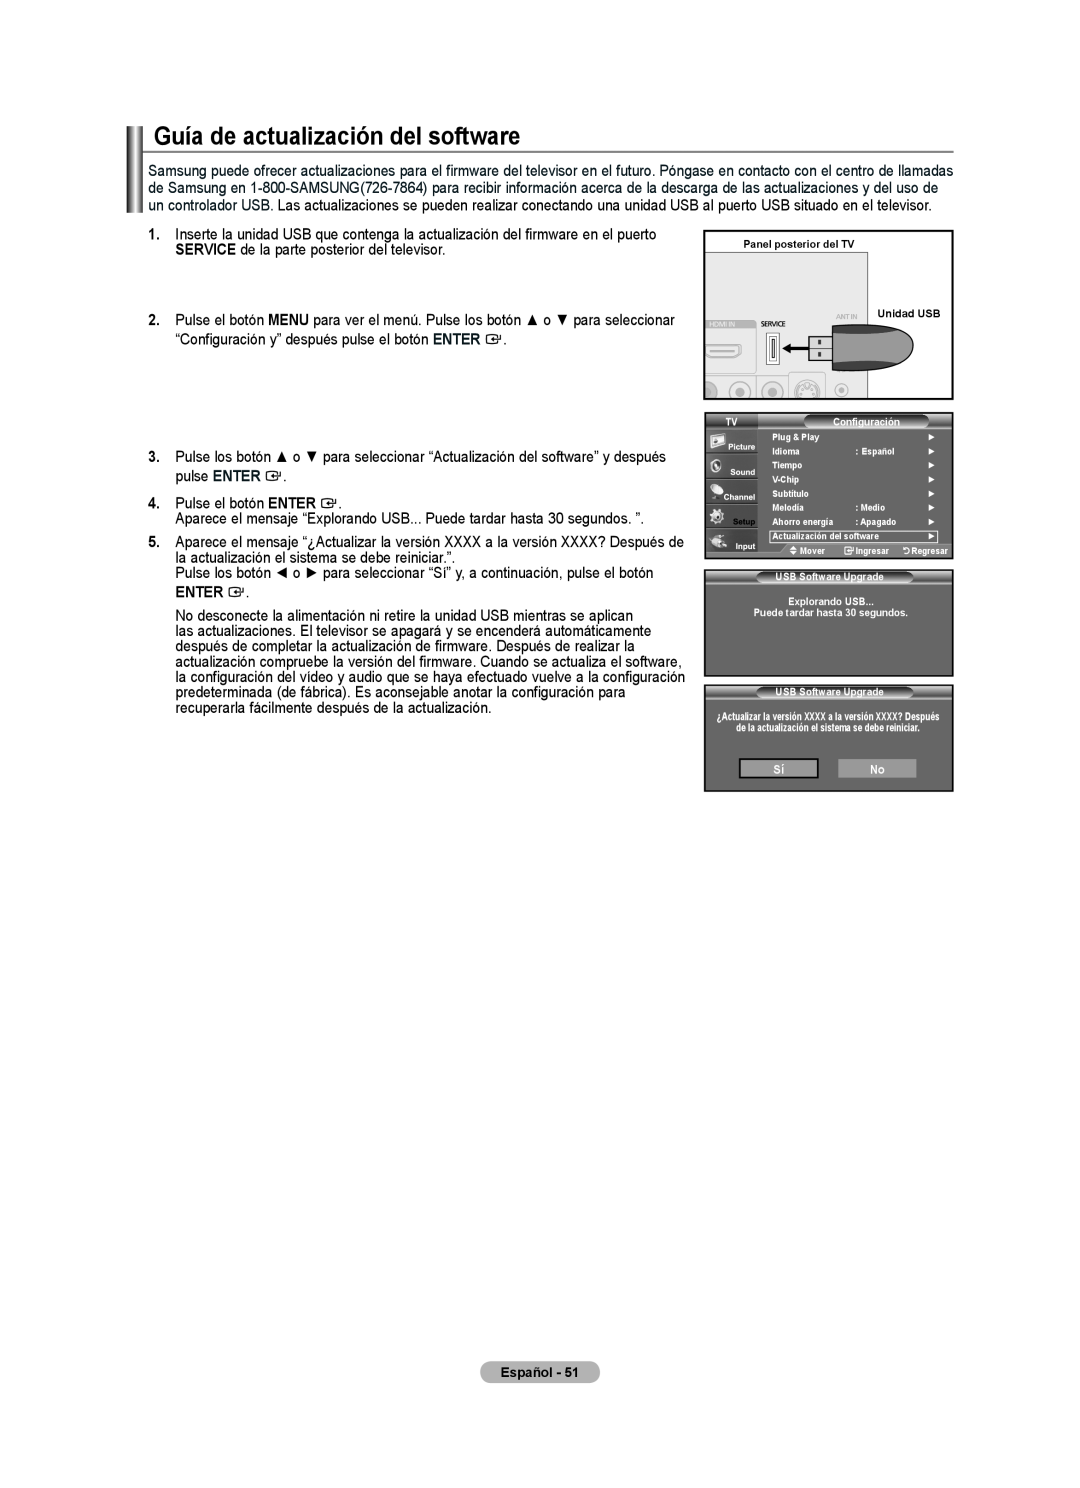 Samsung LN22A330, LN22A0J1D, Series L3 user manual Guía de actualización del software, Enter 